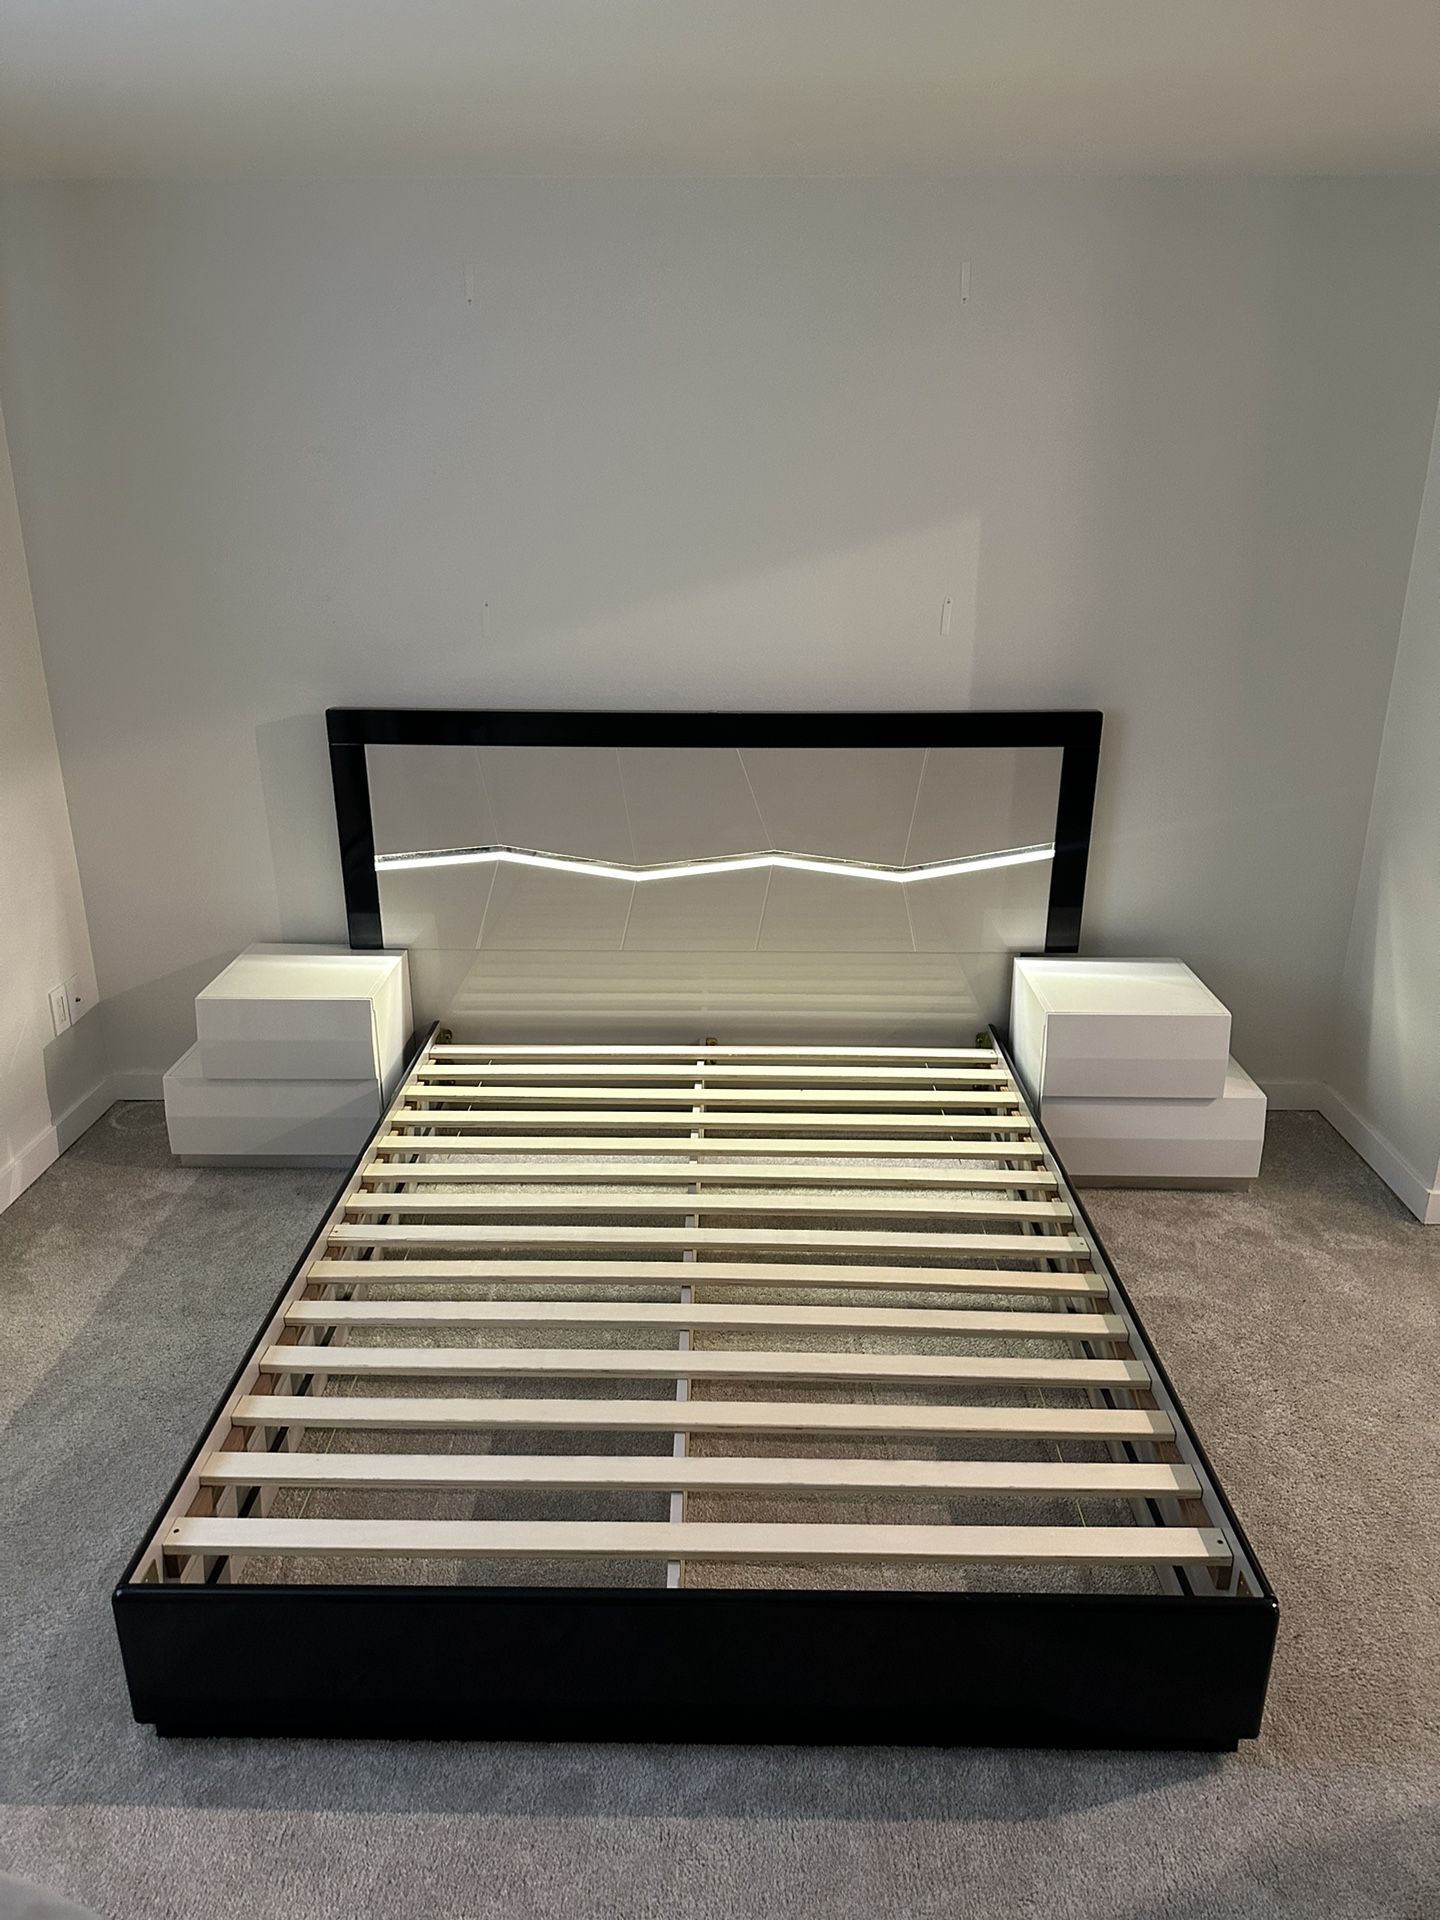 Queen Bed Frame With Nightstands 